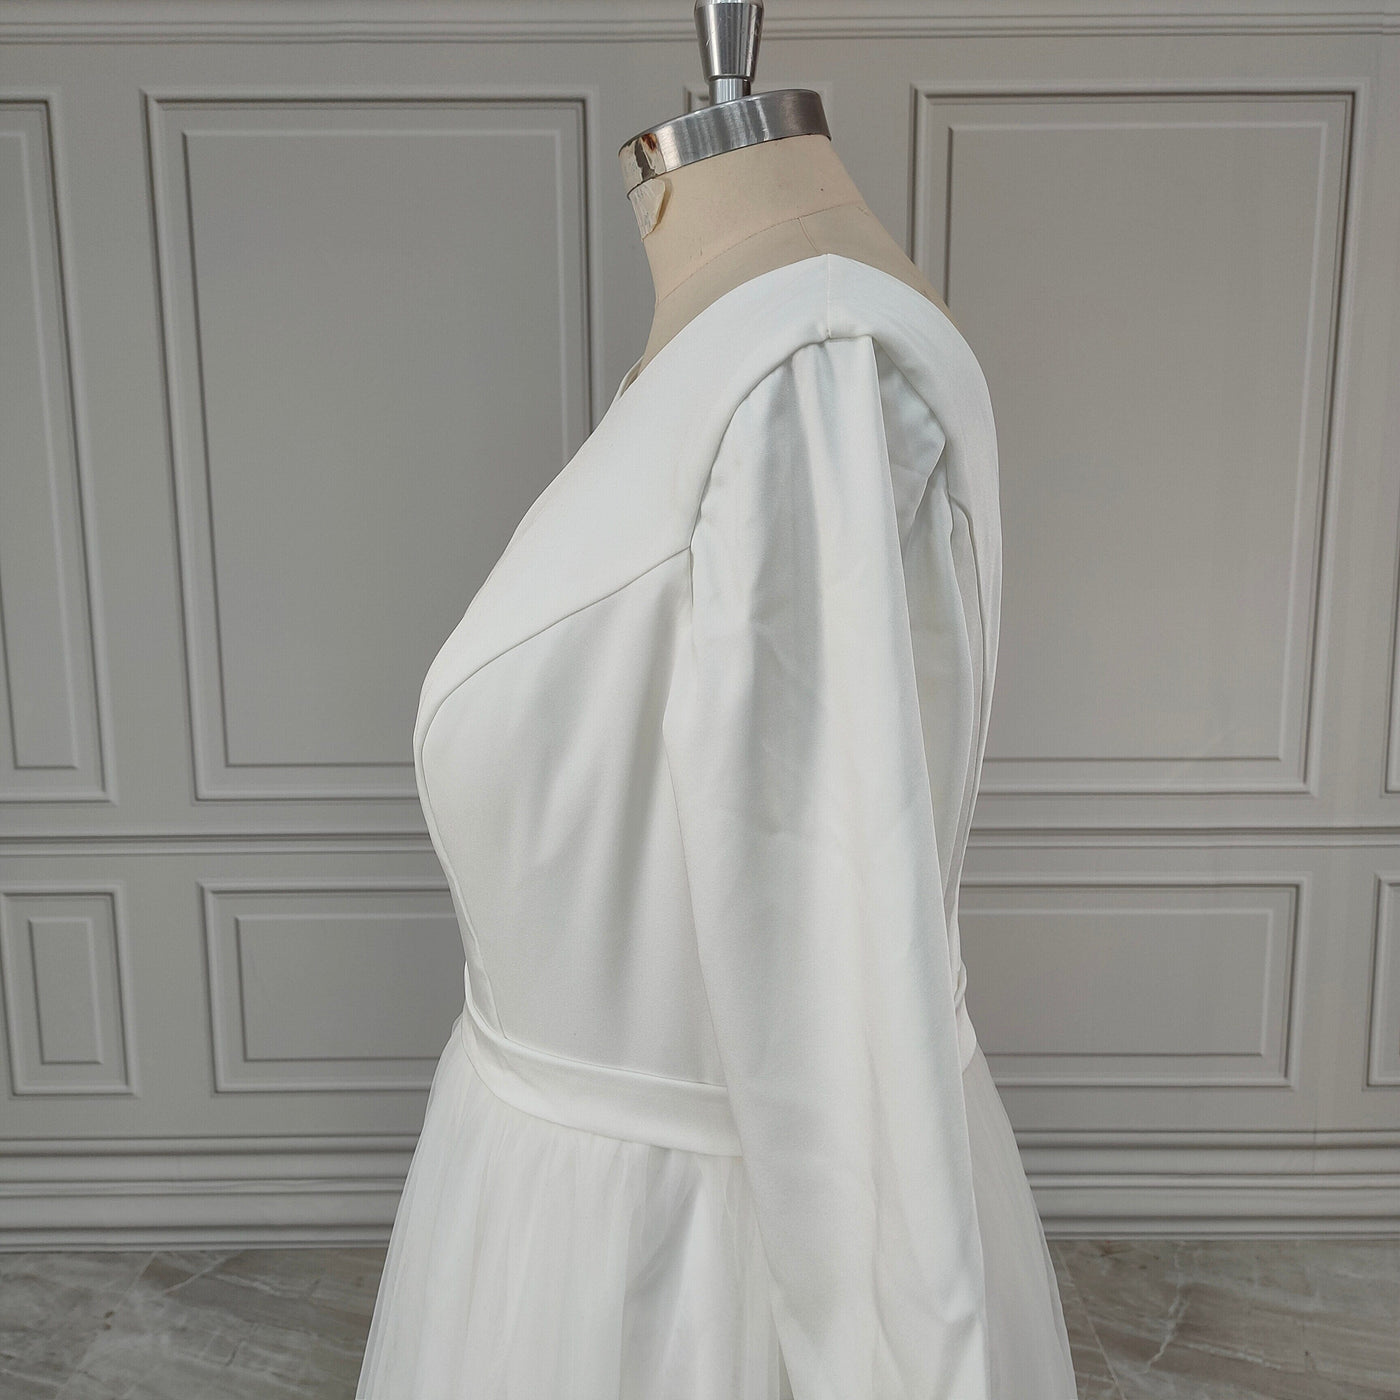 Modest O-Neck Three Quarter Sleeve Bridal Gown Classic Wedding Dresses BlissGown 